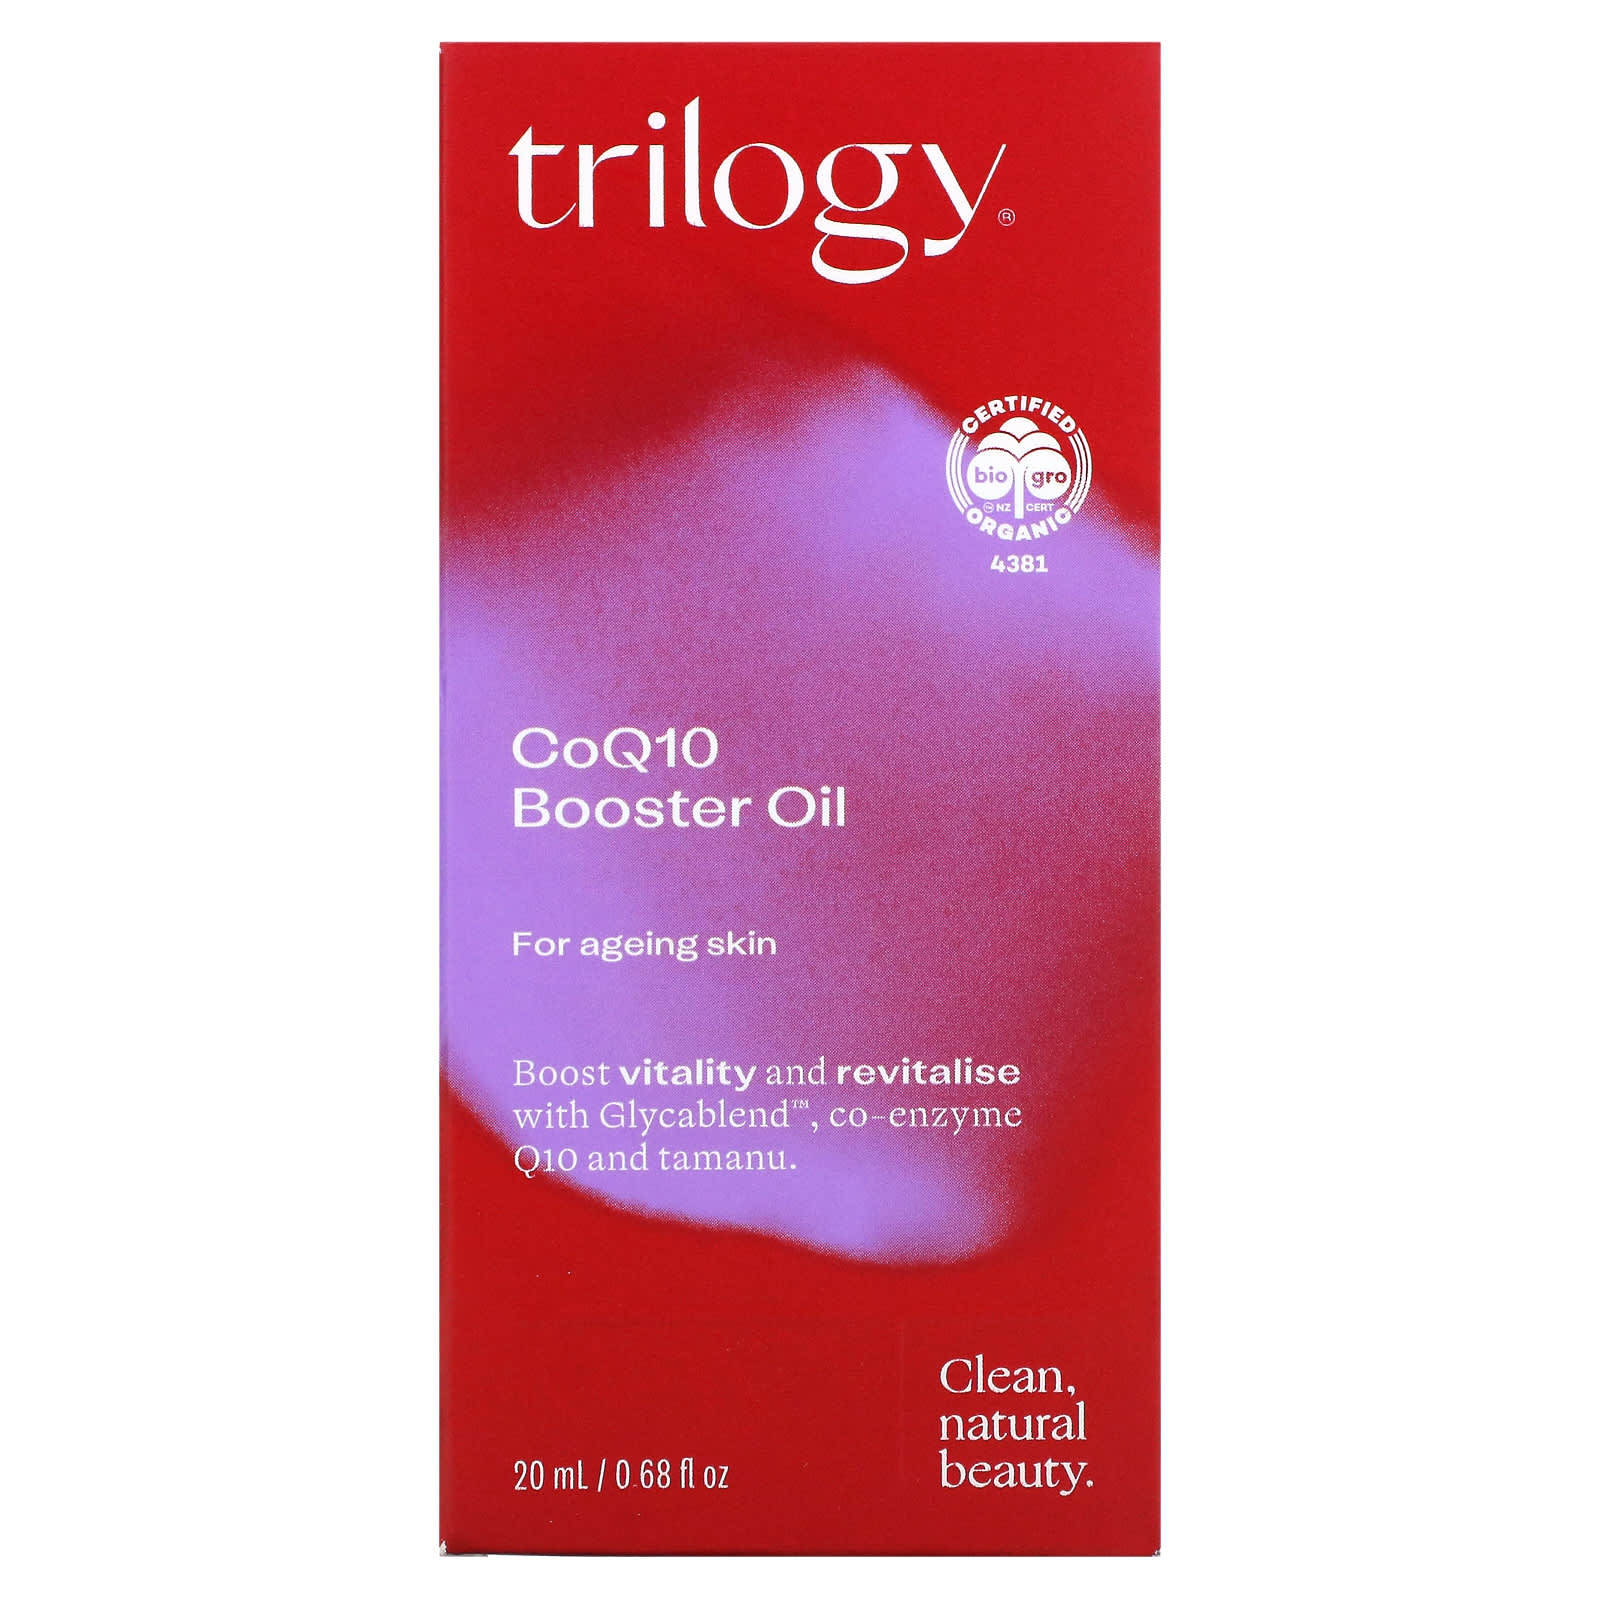 Trilogy, エイジプルーフ、CoQ10ブースターオイル (Trilogy)、0.67液量オンス (20ml)